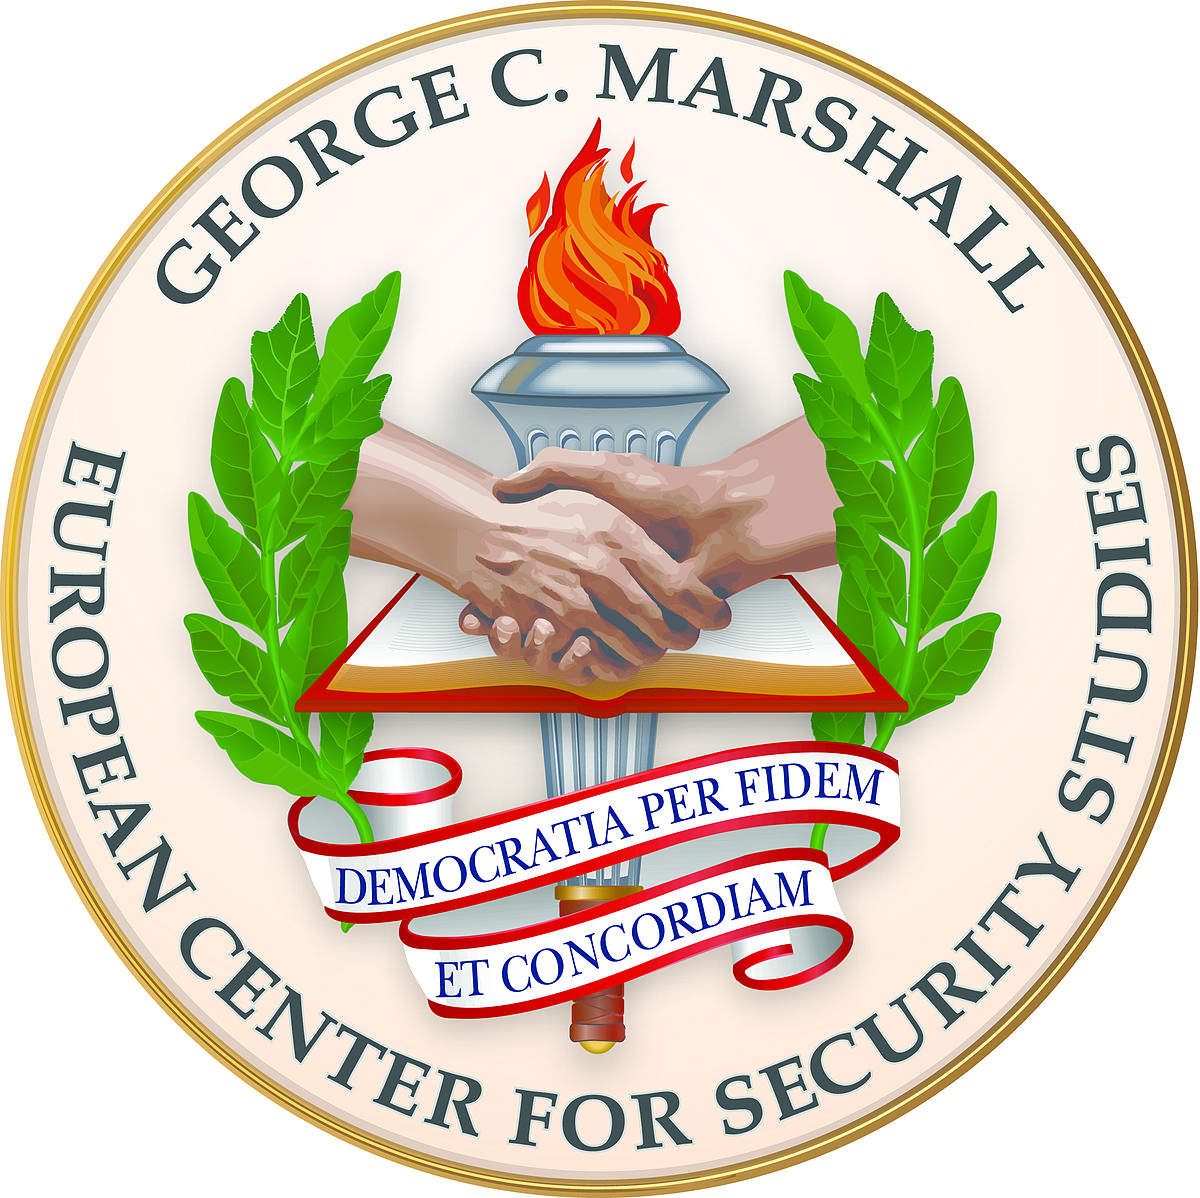 MarshallCenter logo